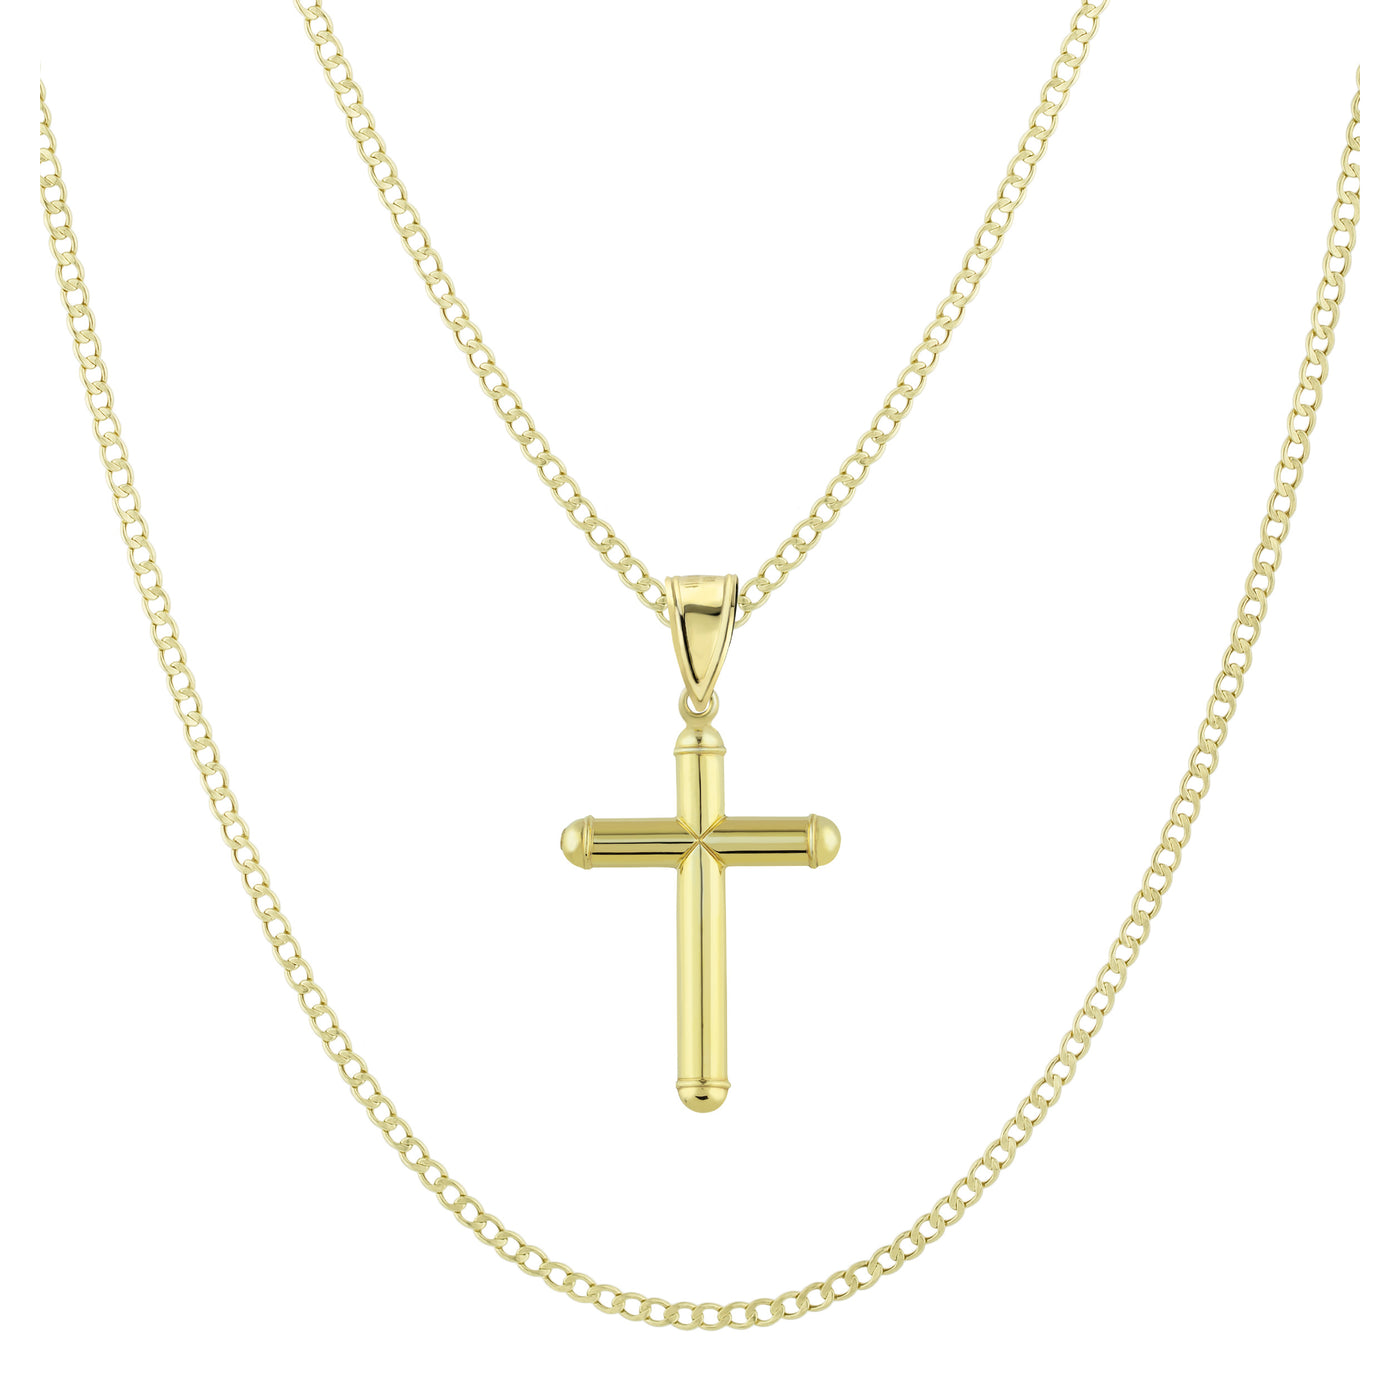 1 3/4" Diamond Cut Cross Tube Pendant & Chain Necklace Set 10K Yellow White Gold